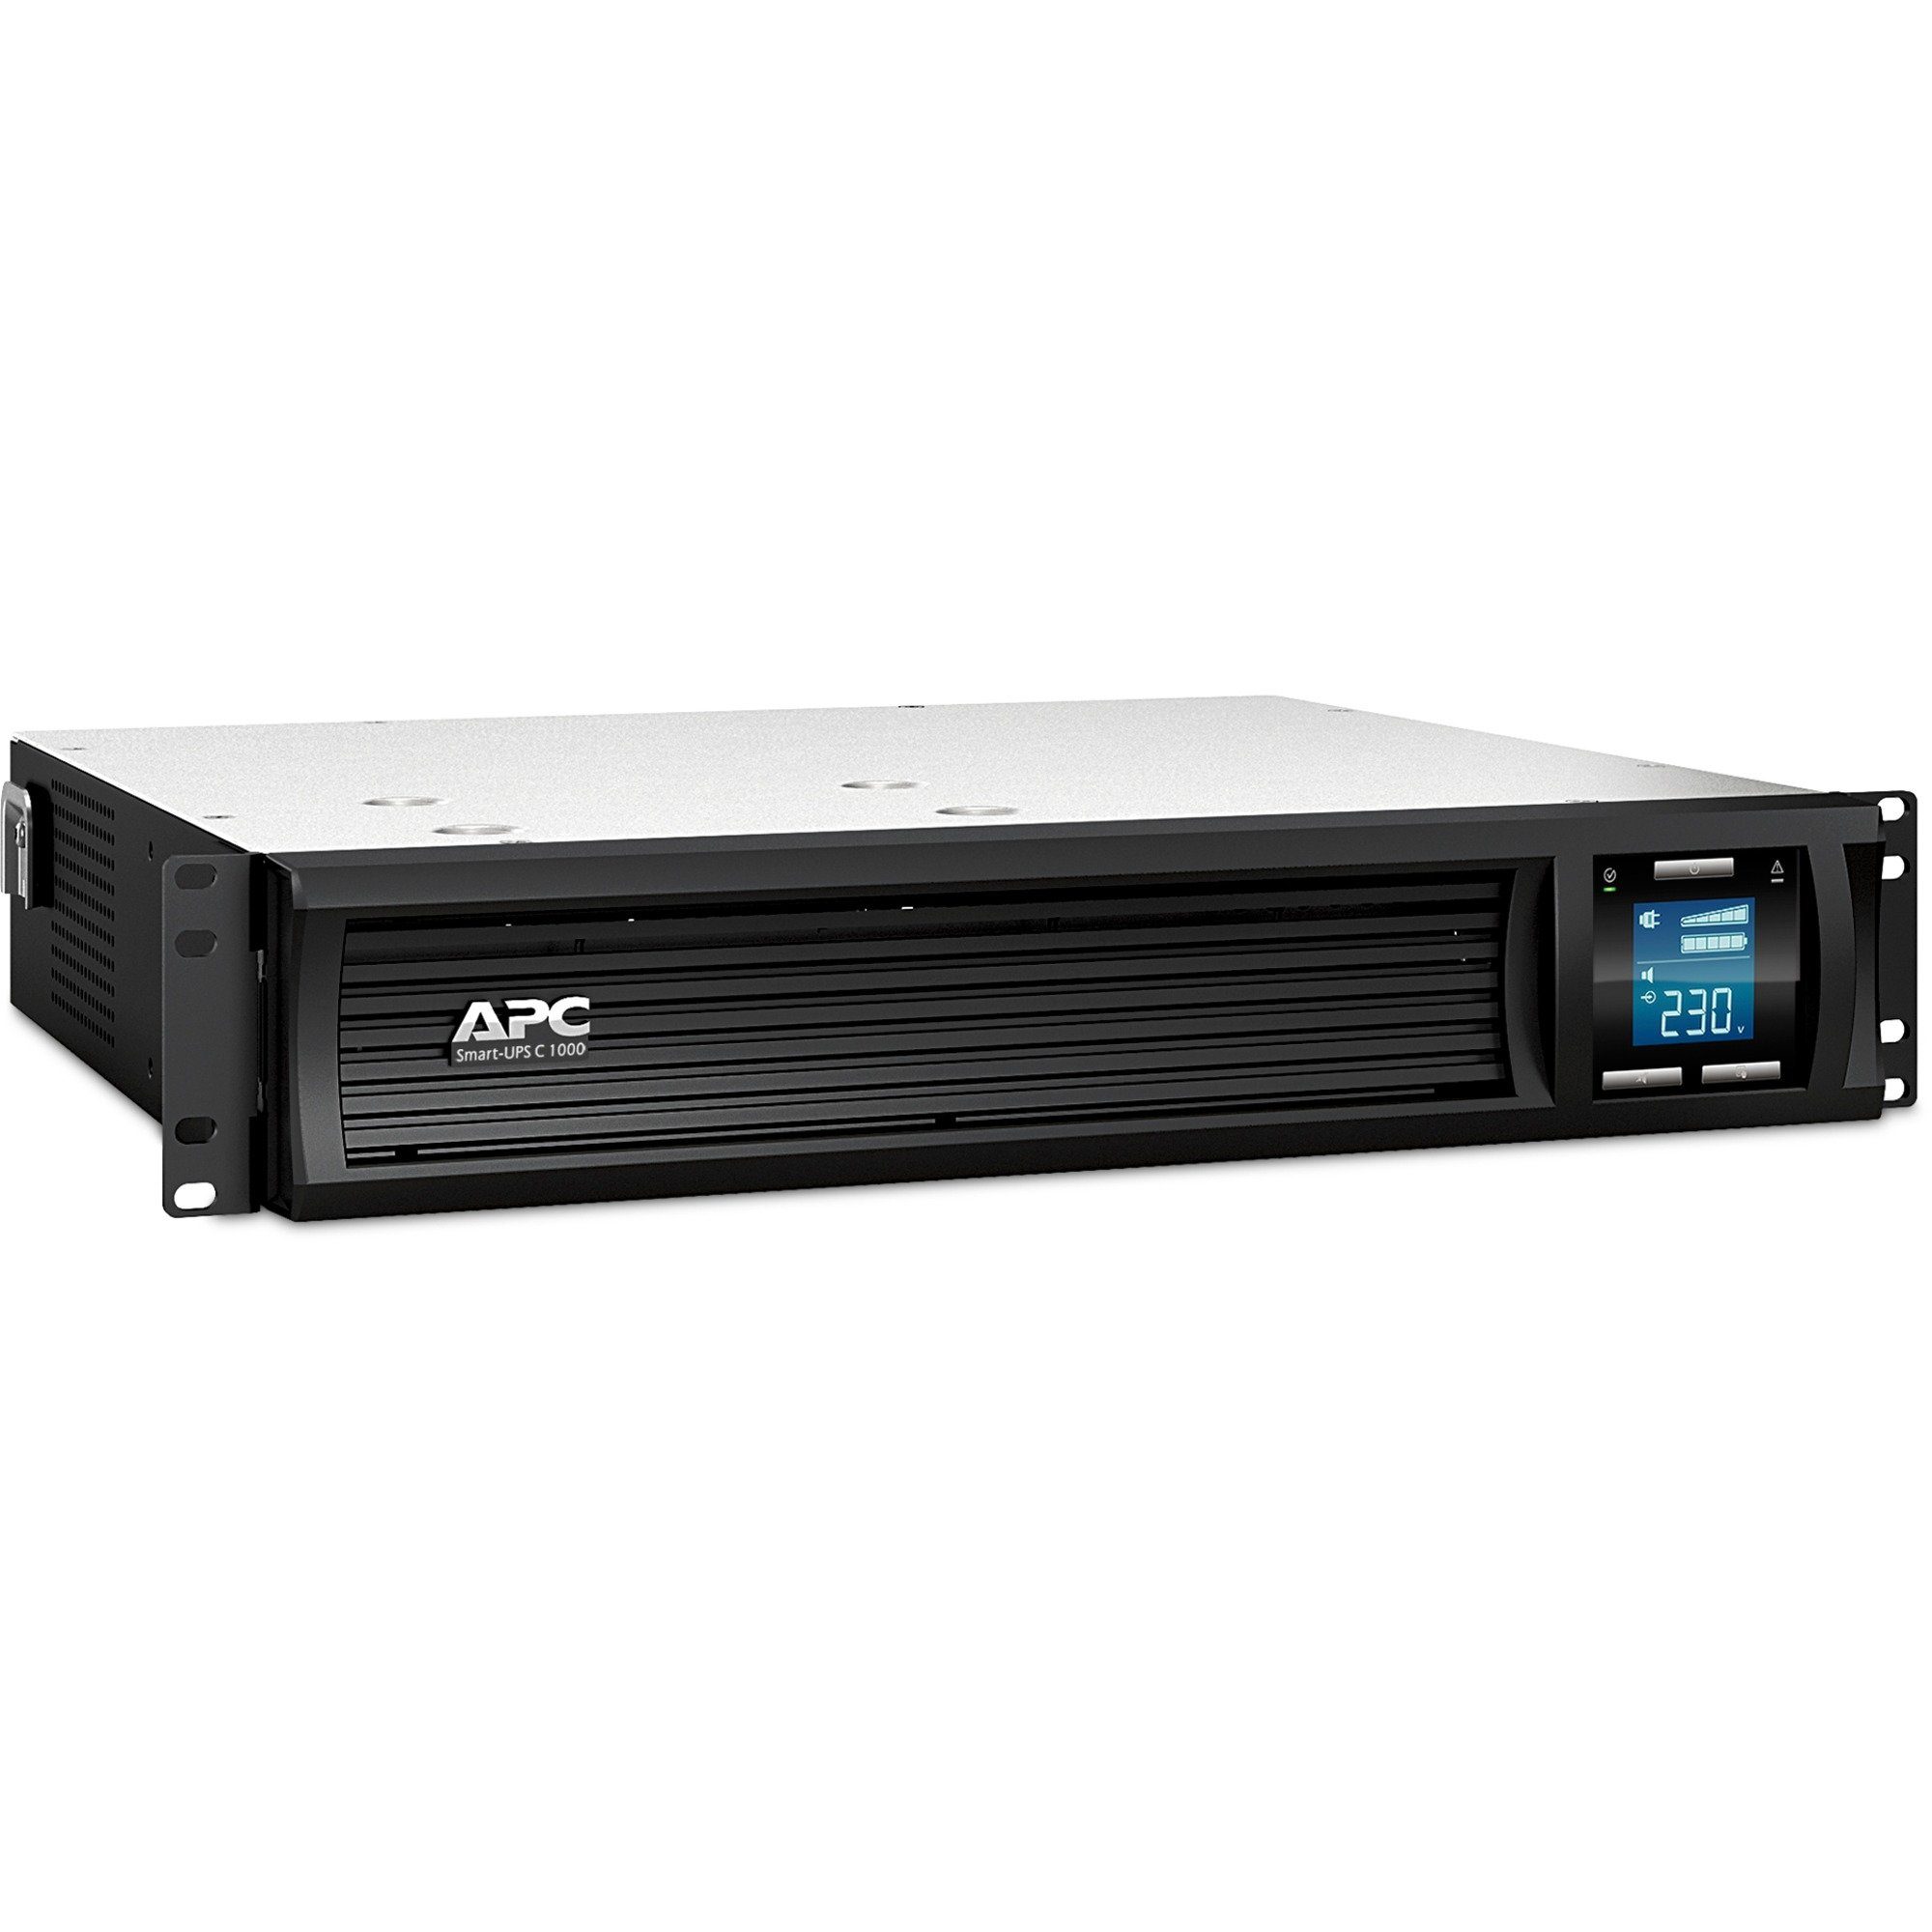 APC APC Smart-UPS C 1000VA LCD RM 2U 230V, USV, (mit Stromspeicher